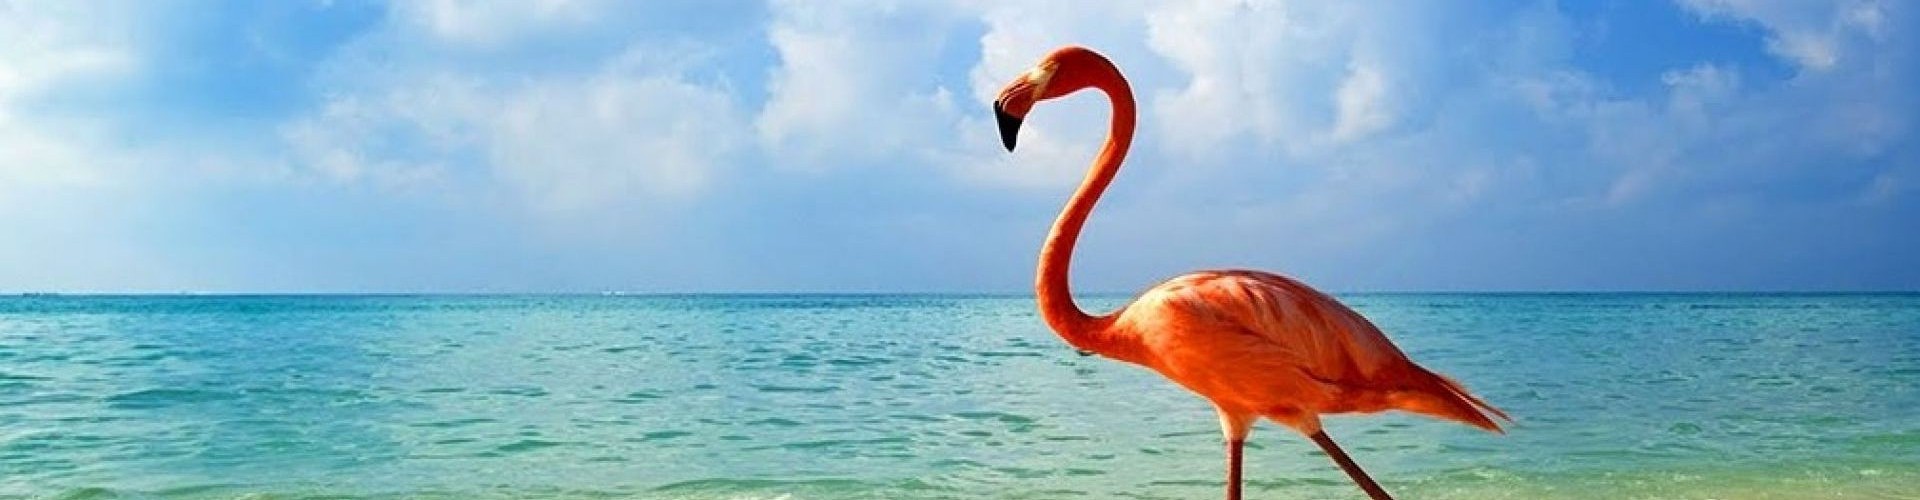 1 - Flamingo